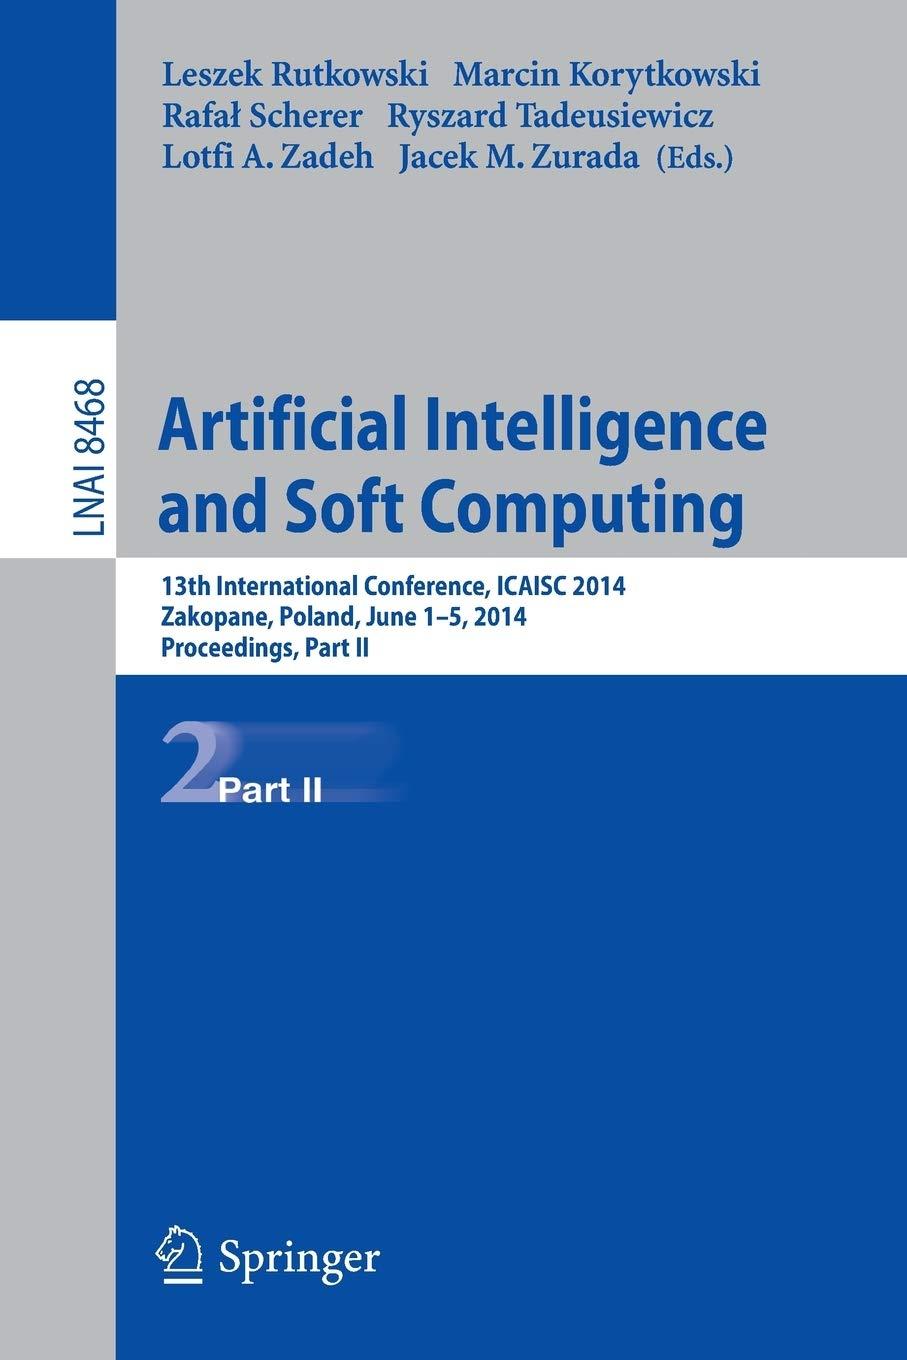 Artificial Intelligence And Soft Computing 13th International Conference ICAISC 2014 Zakopane Poland June 1-5 2014 Proceedings Part II LNAI 8468